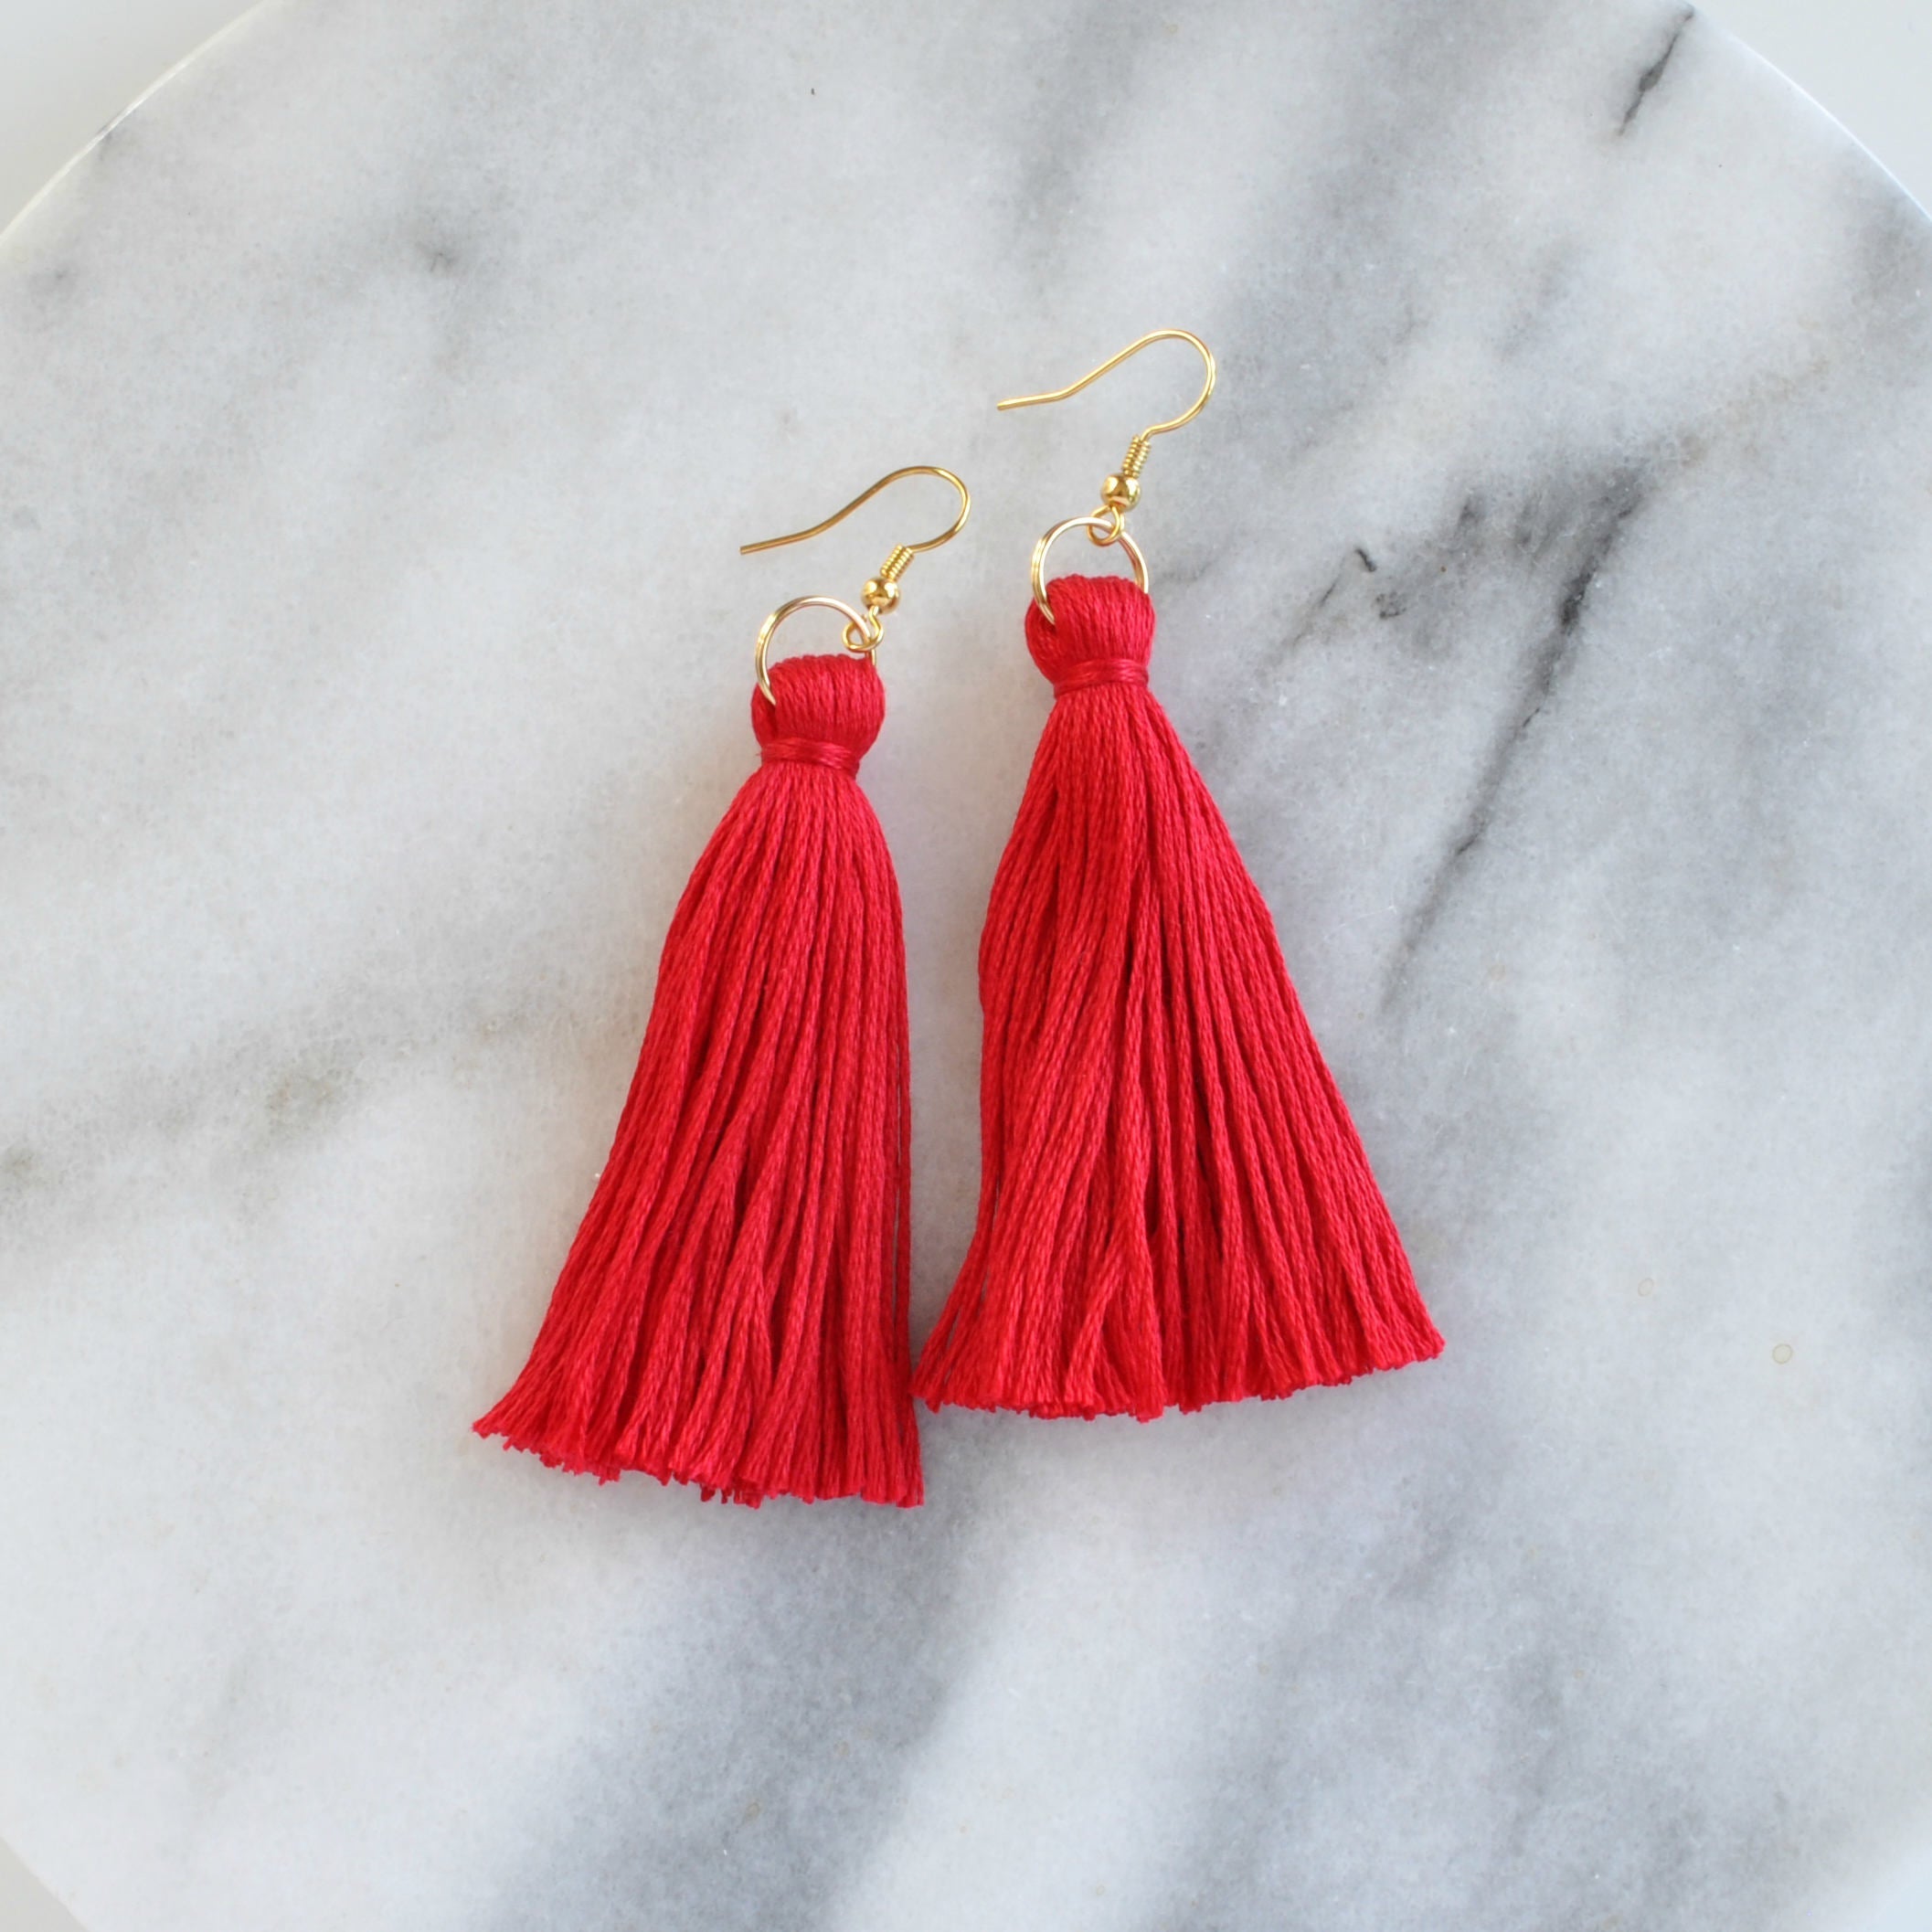 Libby & Smee red tassel earrings on gold earwires in long